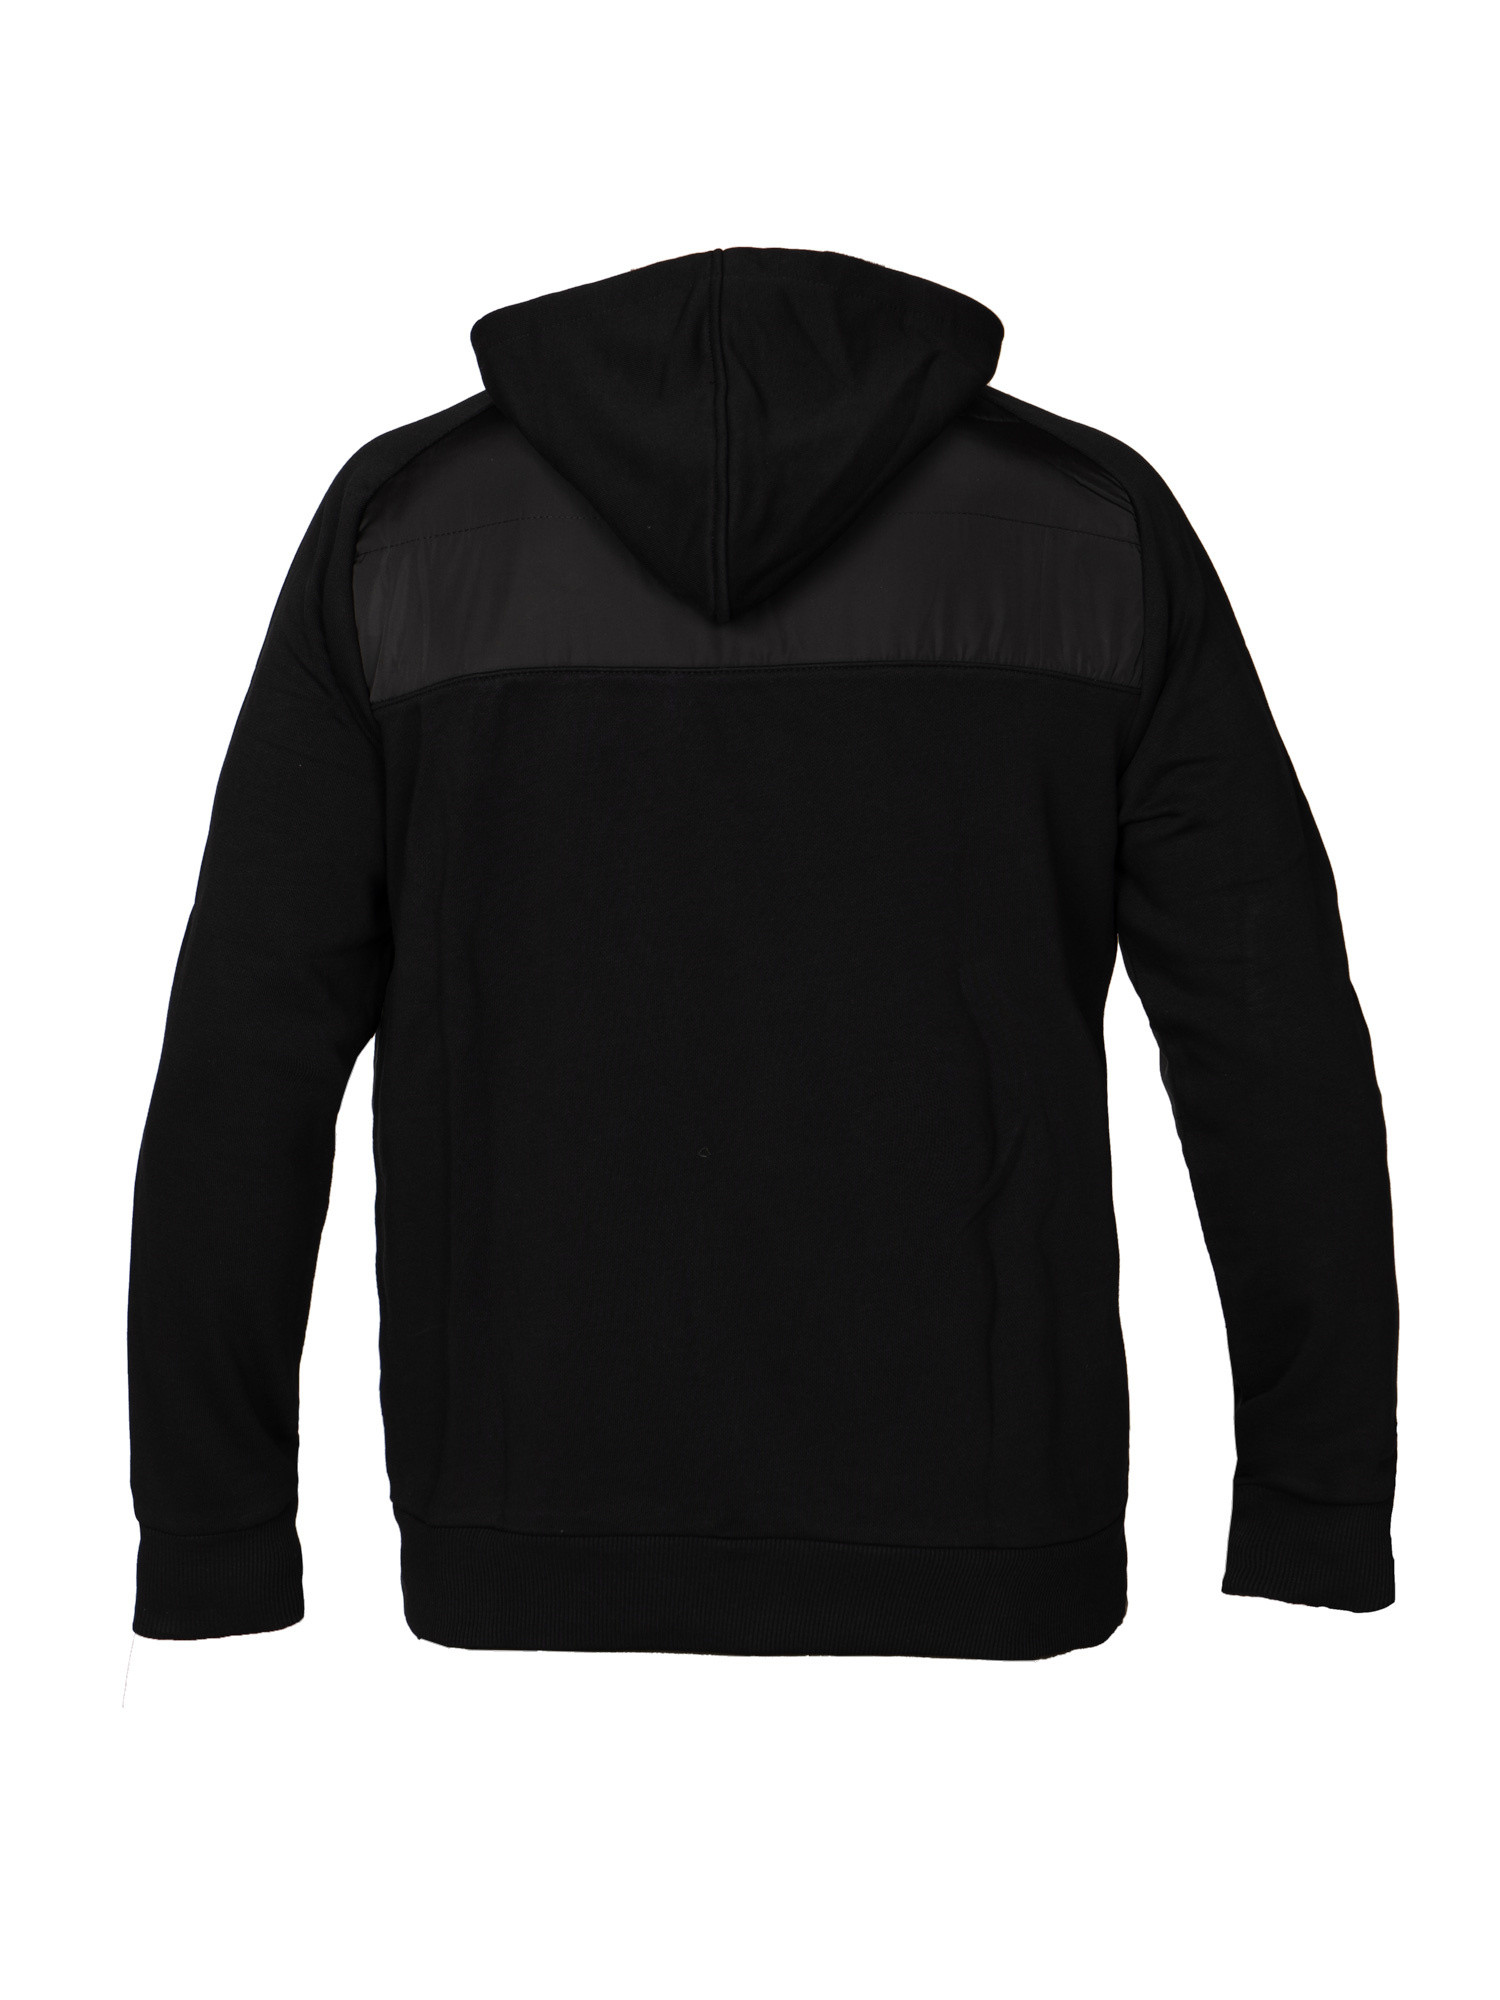 Slim fit sweatshirt with hood, Black, large image number 1